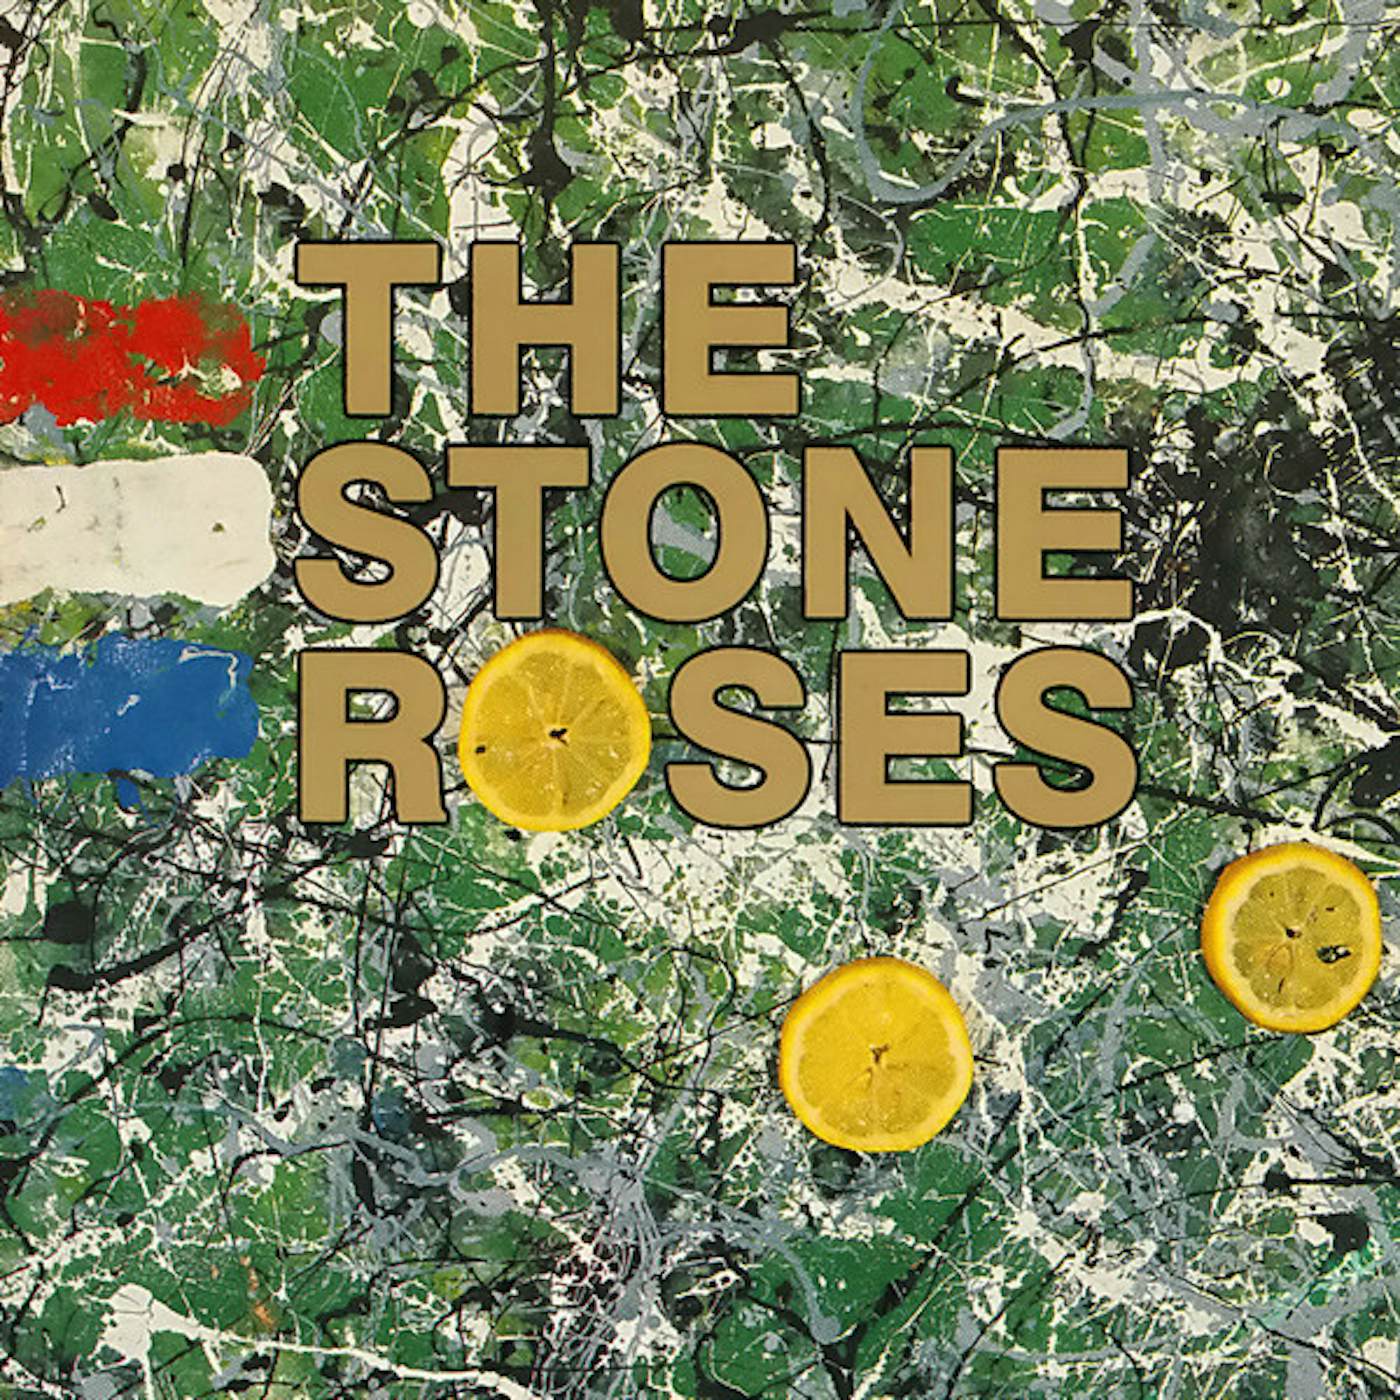 The Stone Roses Vinyl Record